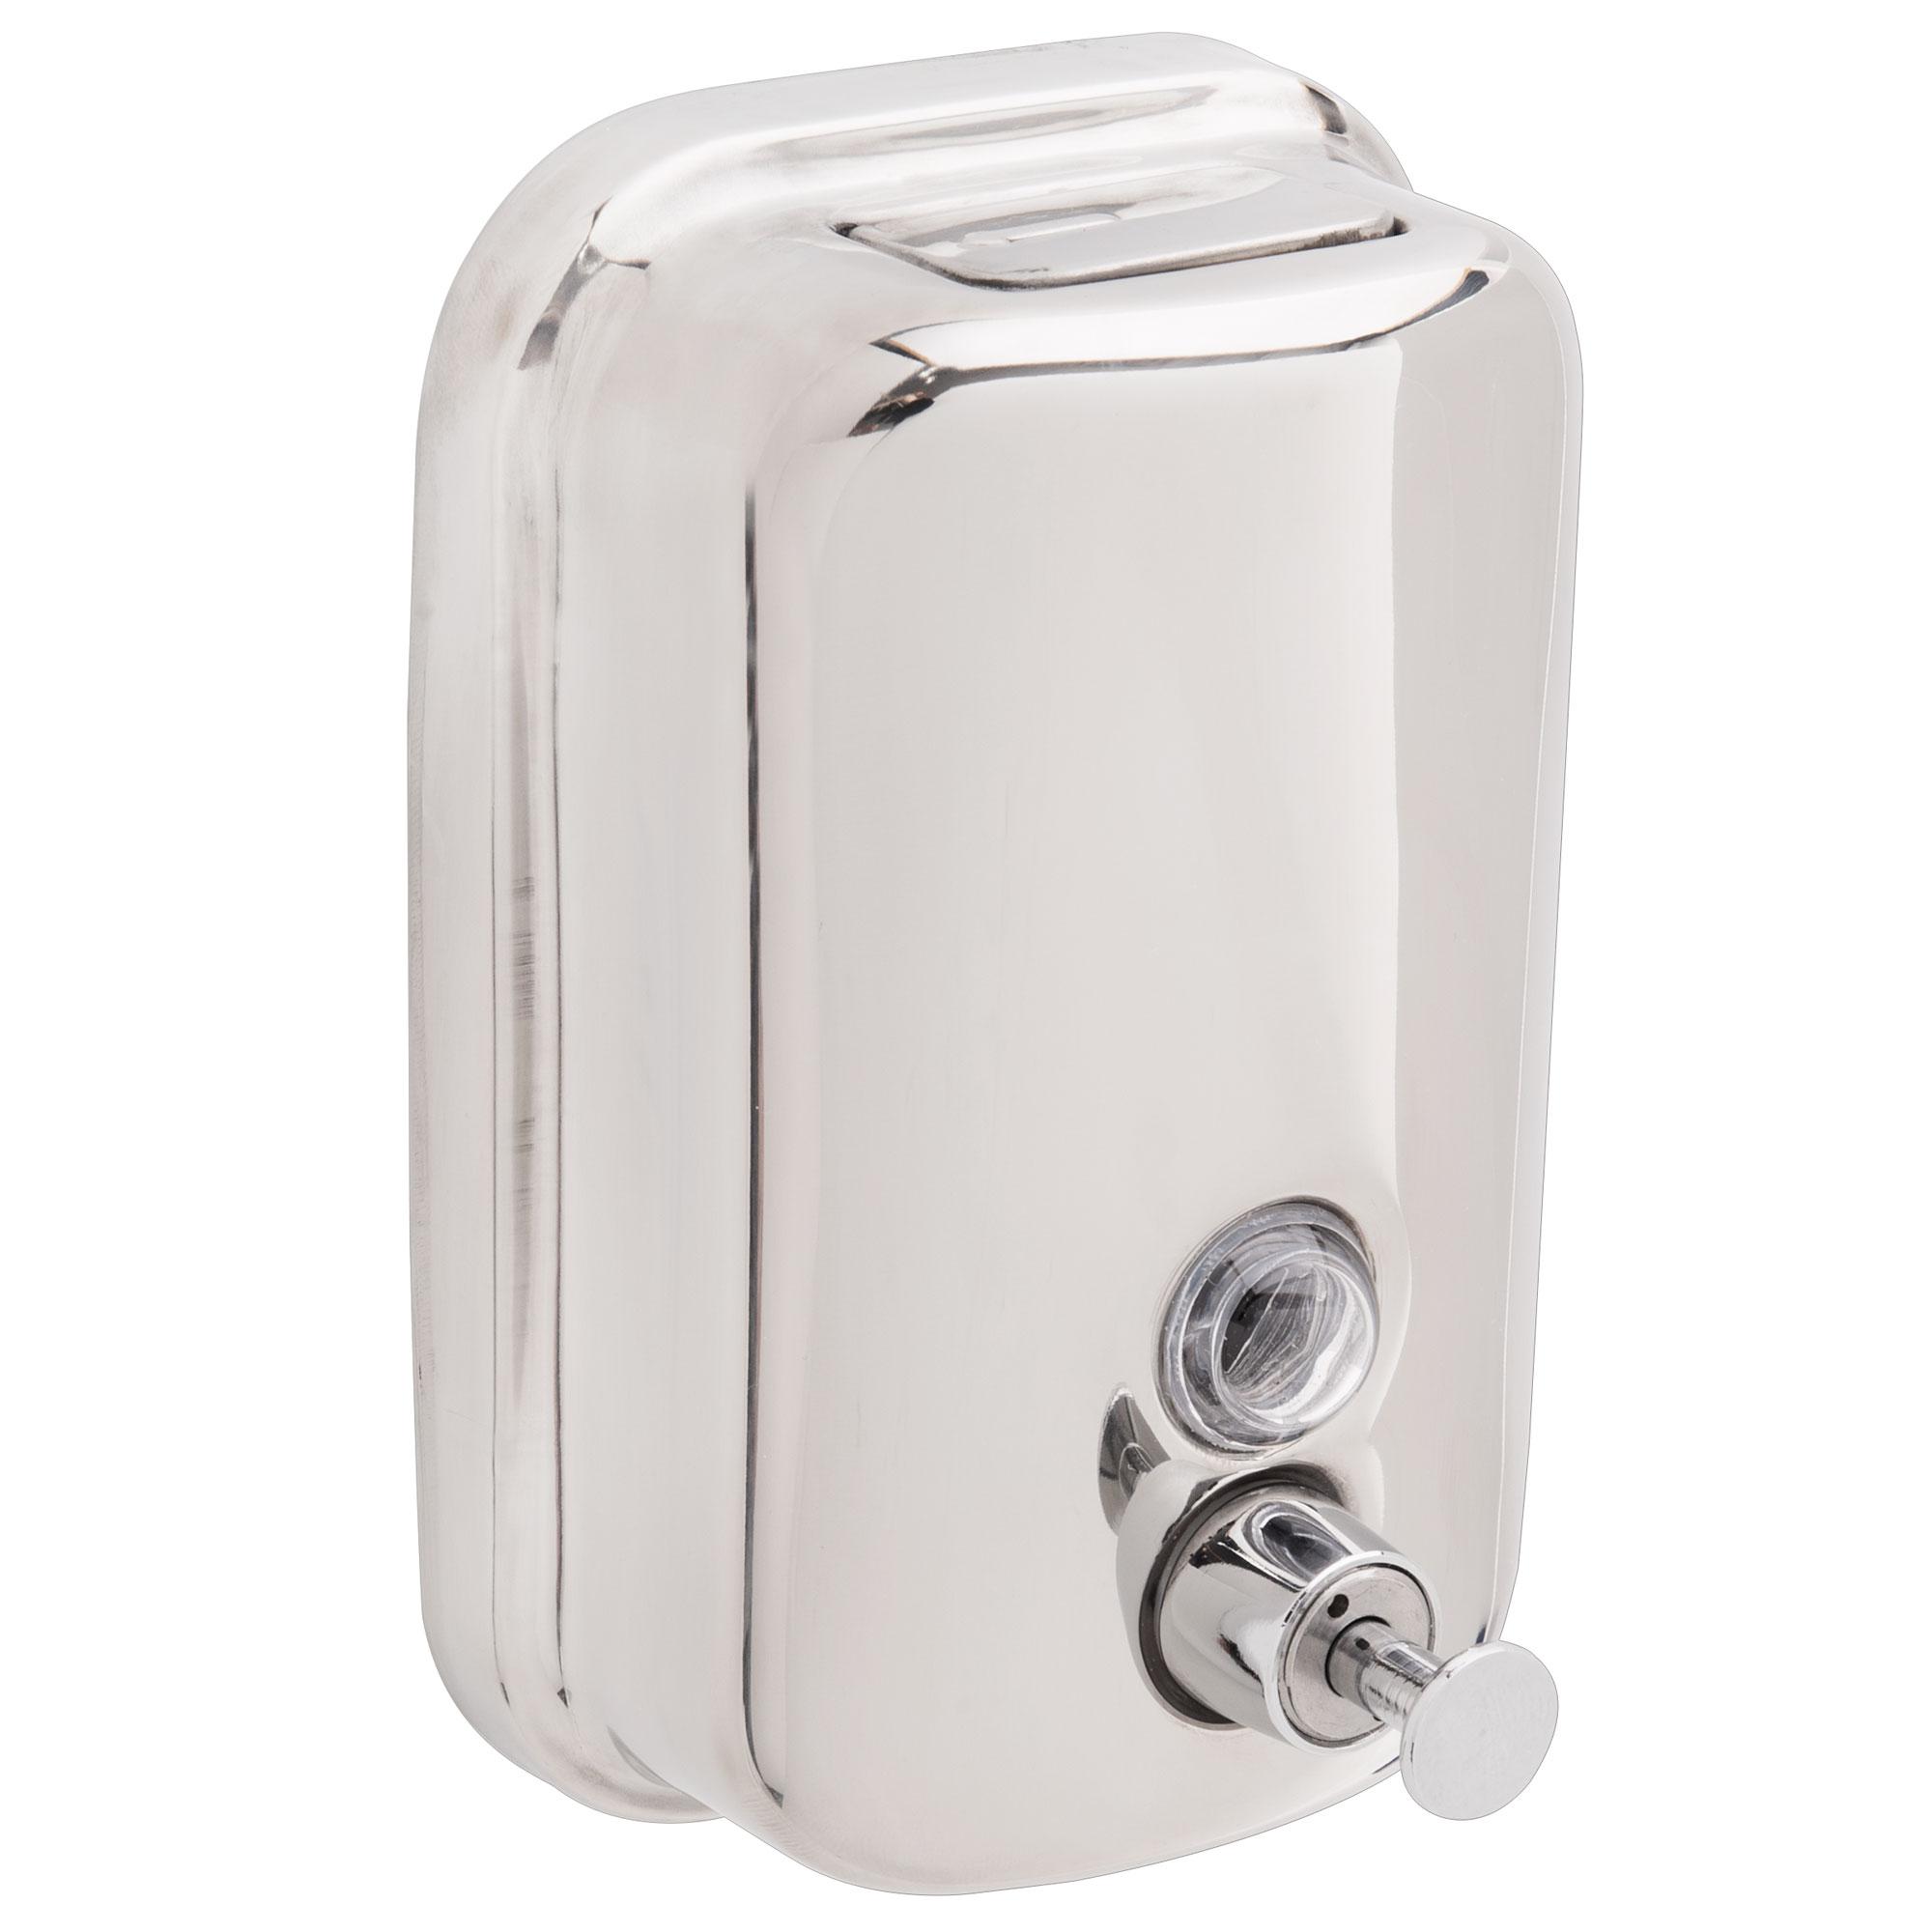 #304 Stainless Steel Wall-mount Soap Dispenser, 500mL